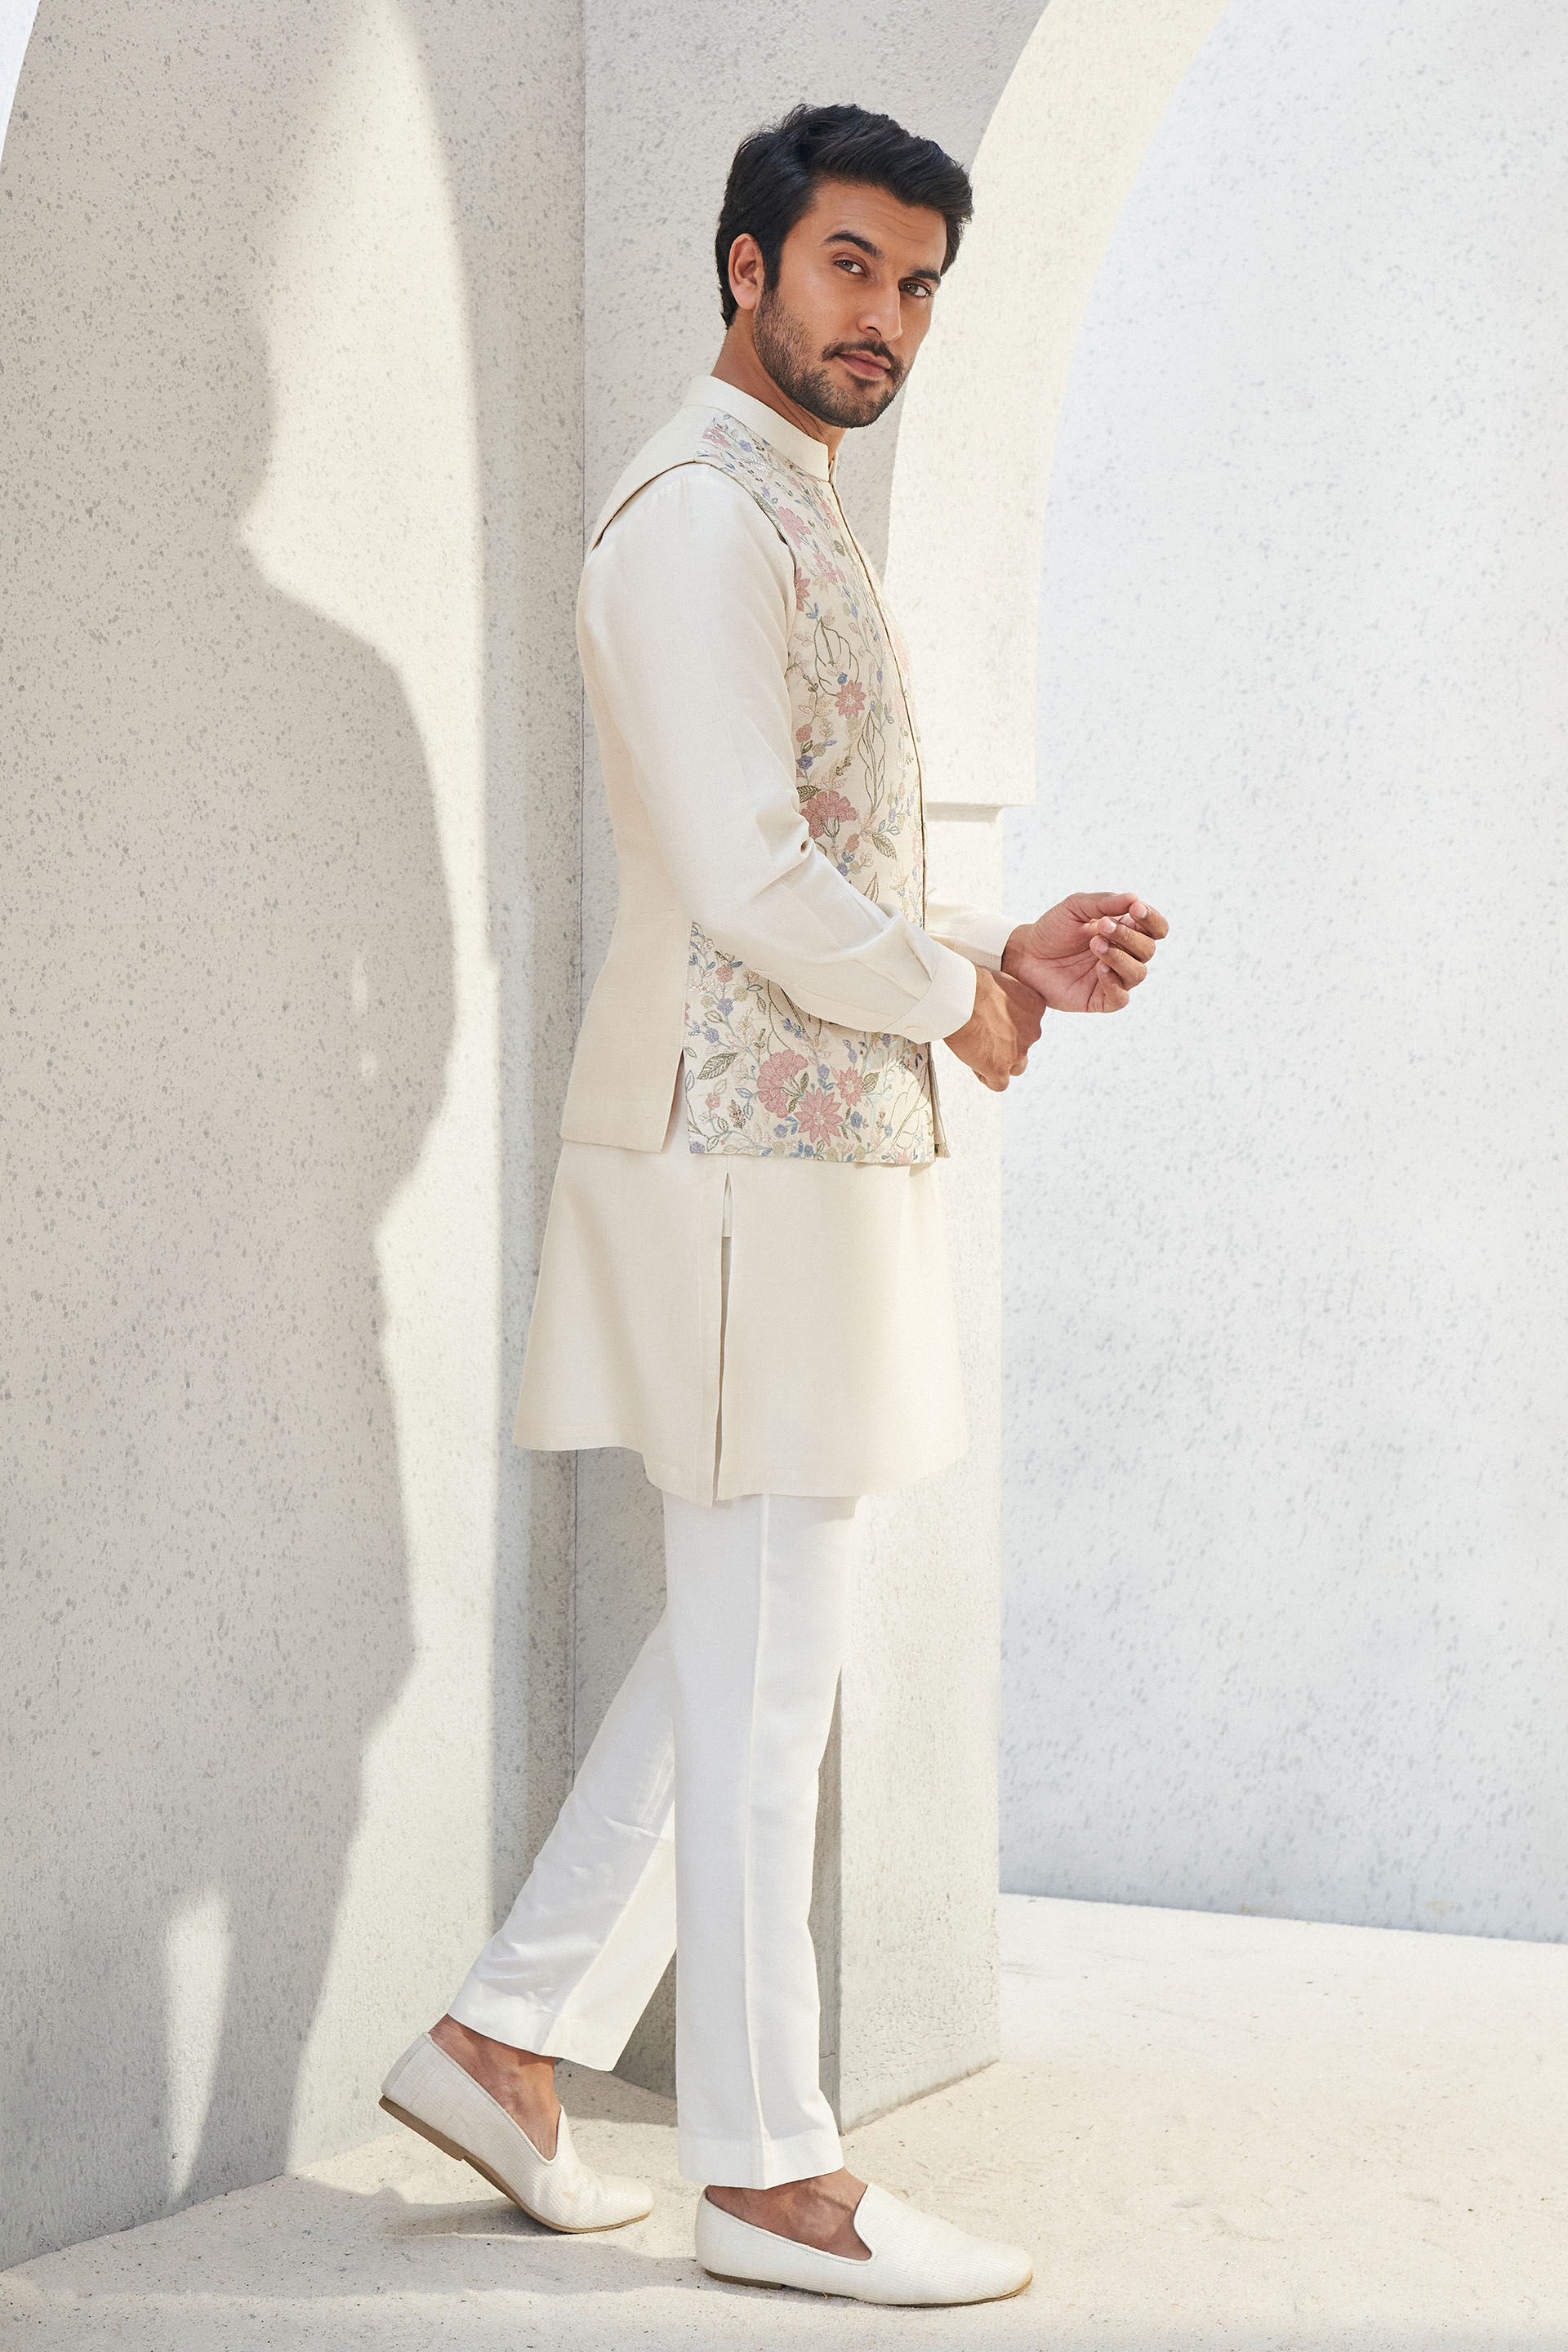 Real Grooms Spotted Wearing Trendy Nehru Jackets | by Gaurav Gupta | Medium